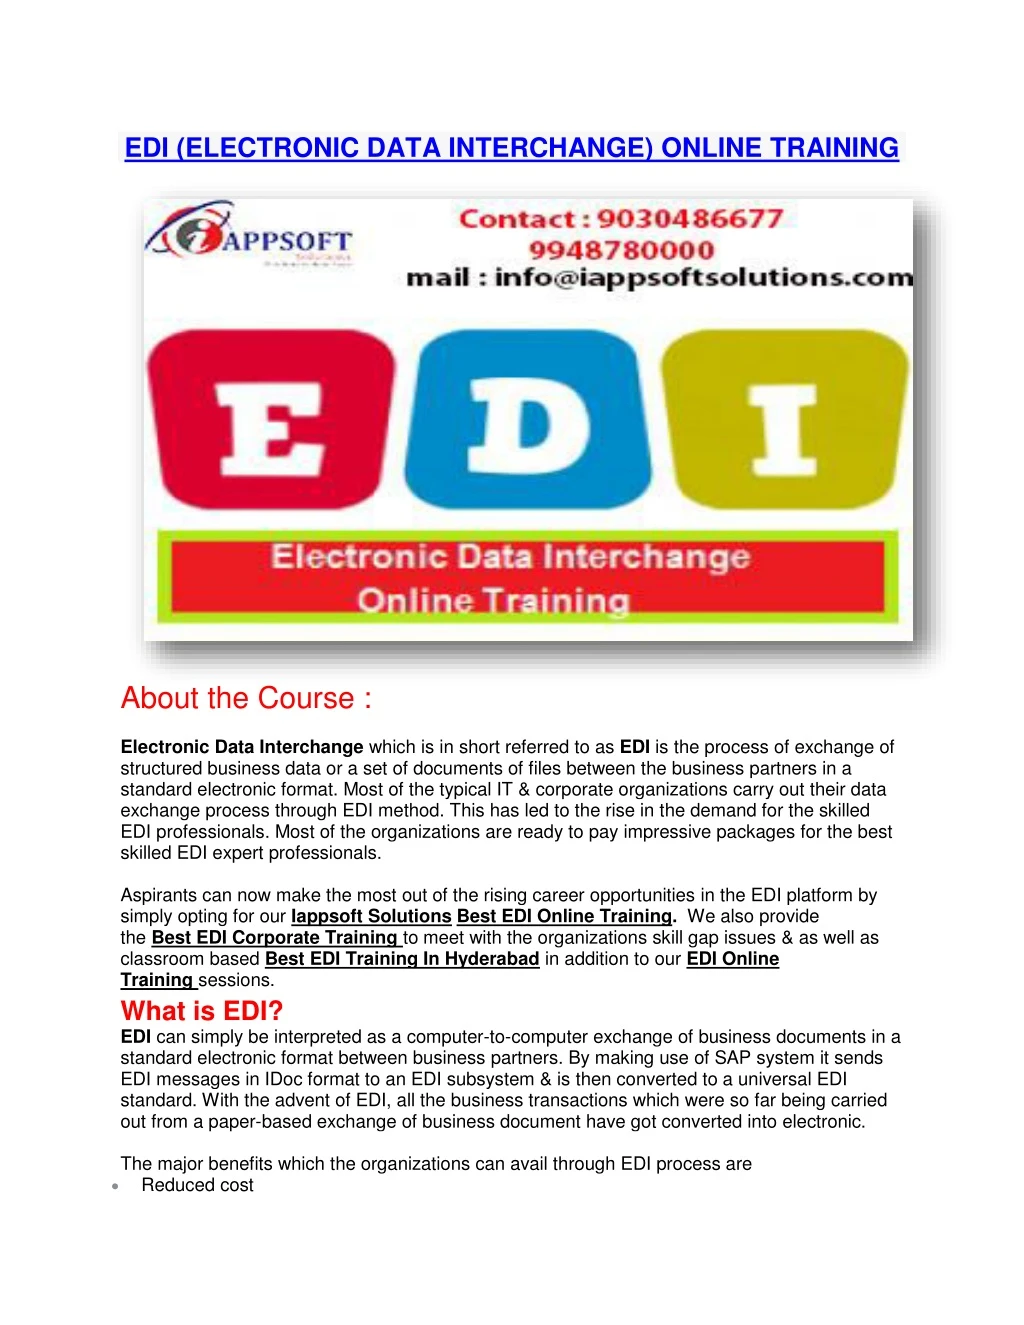 edi electronic data interchange online training